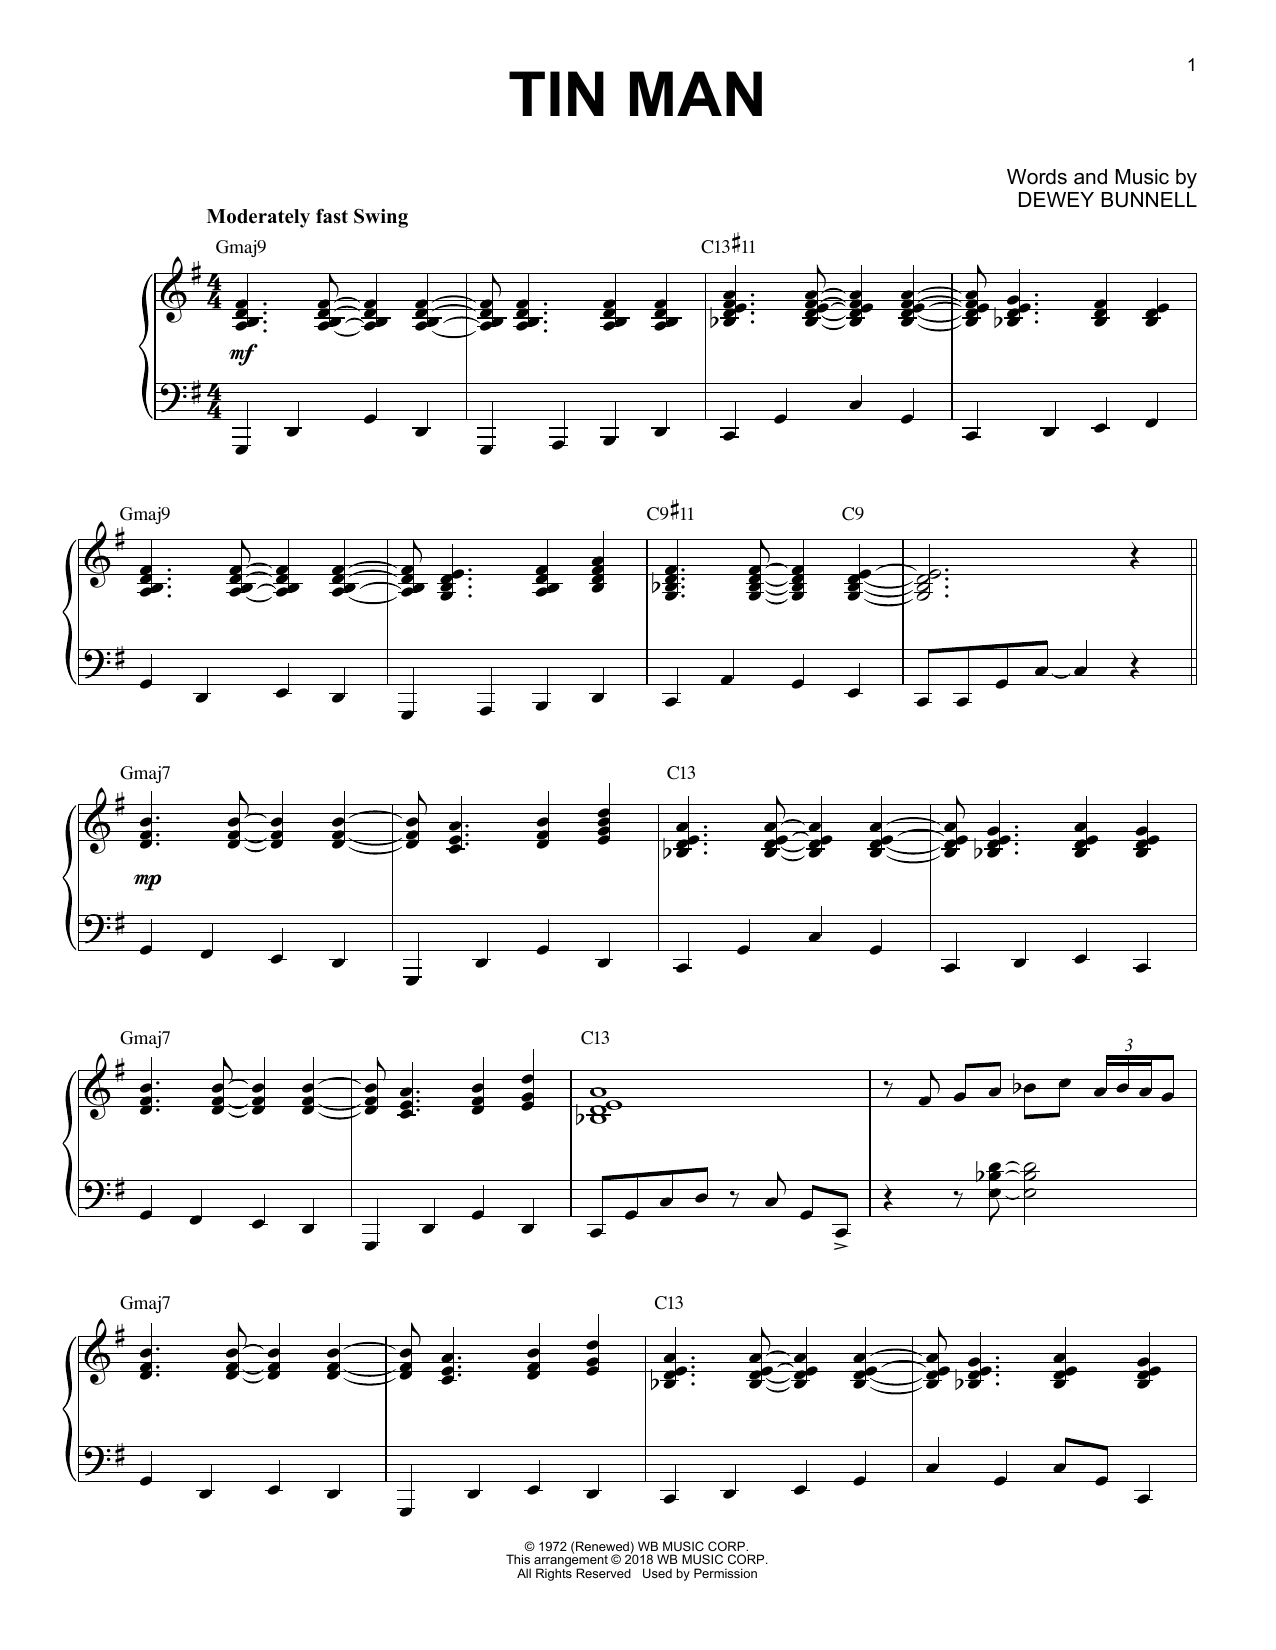 America Tin Man [Jazz version] Sheet Music Notes & Chords for Piano - Download or Print PDF